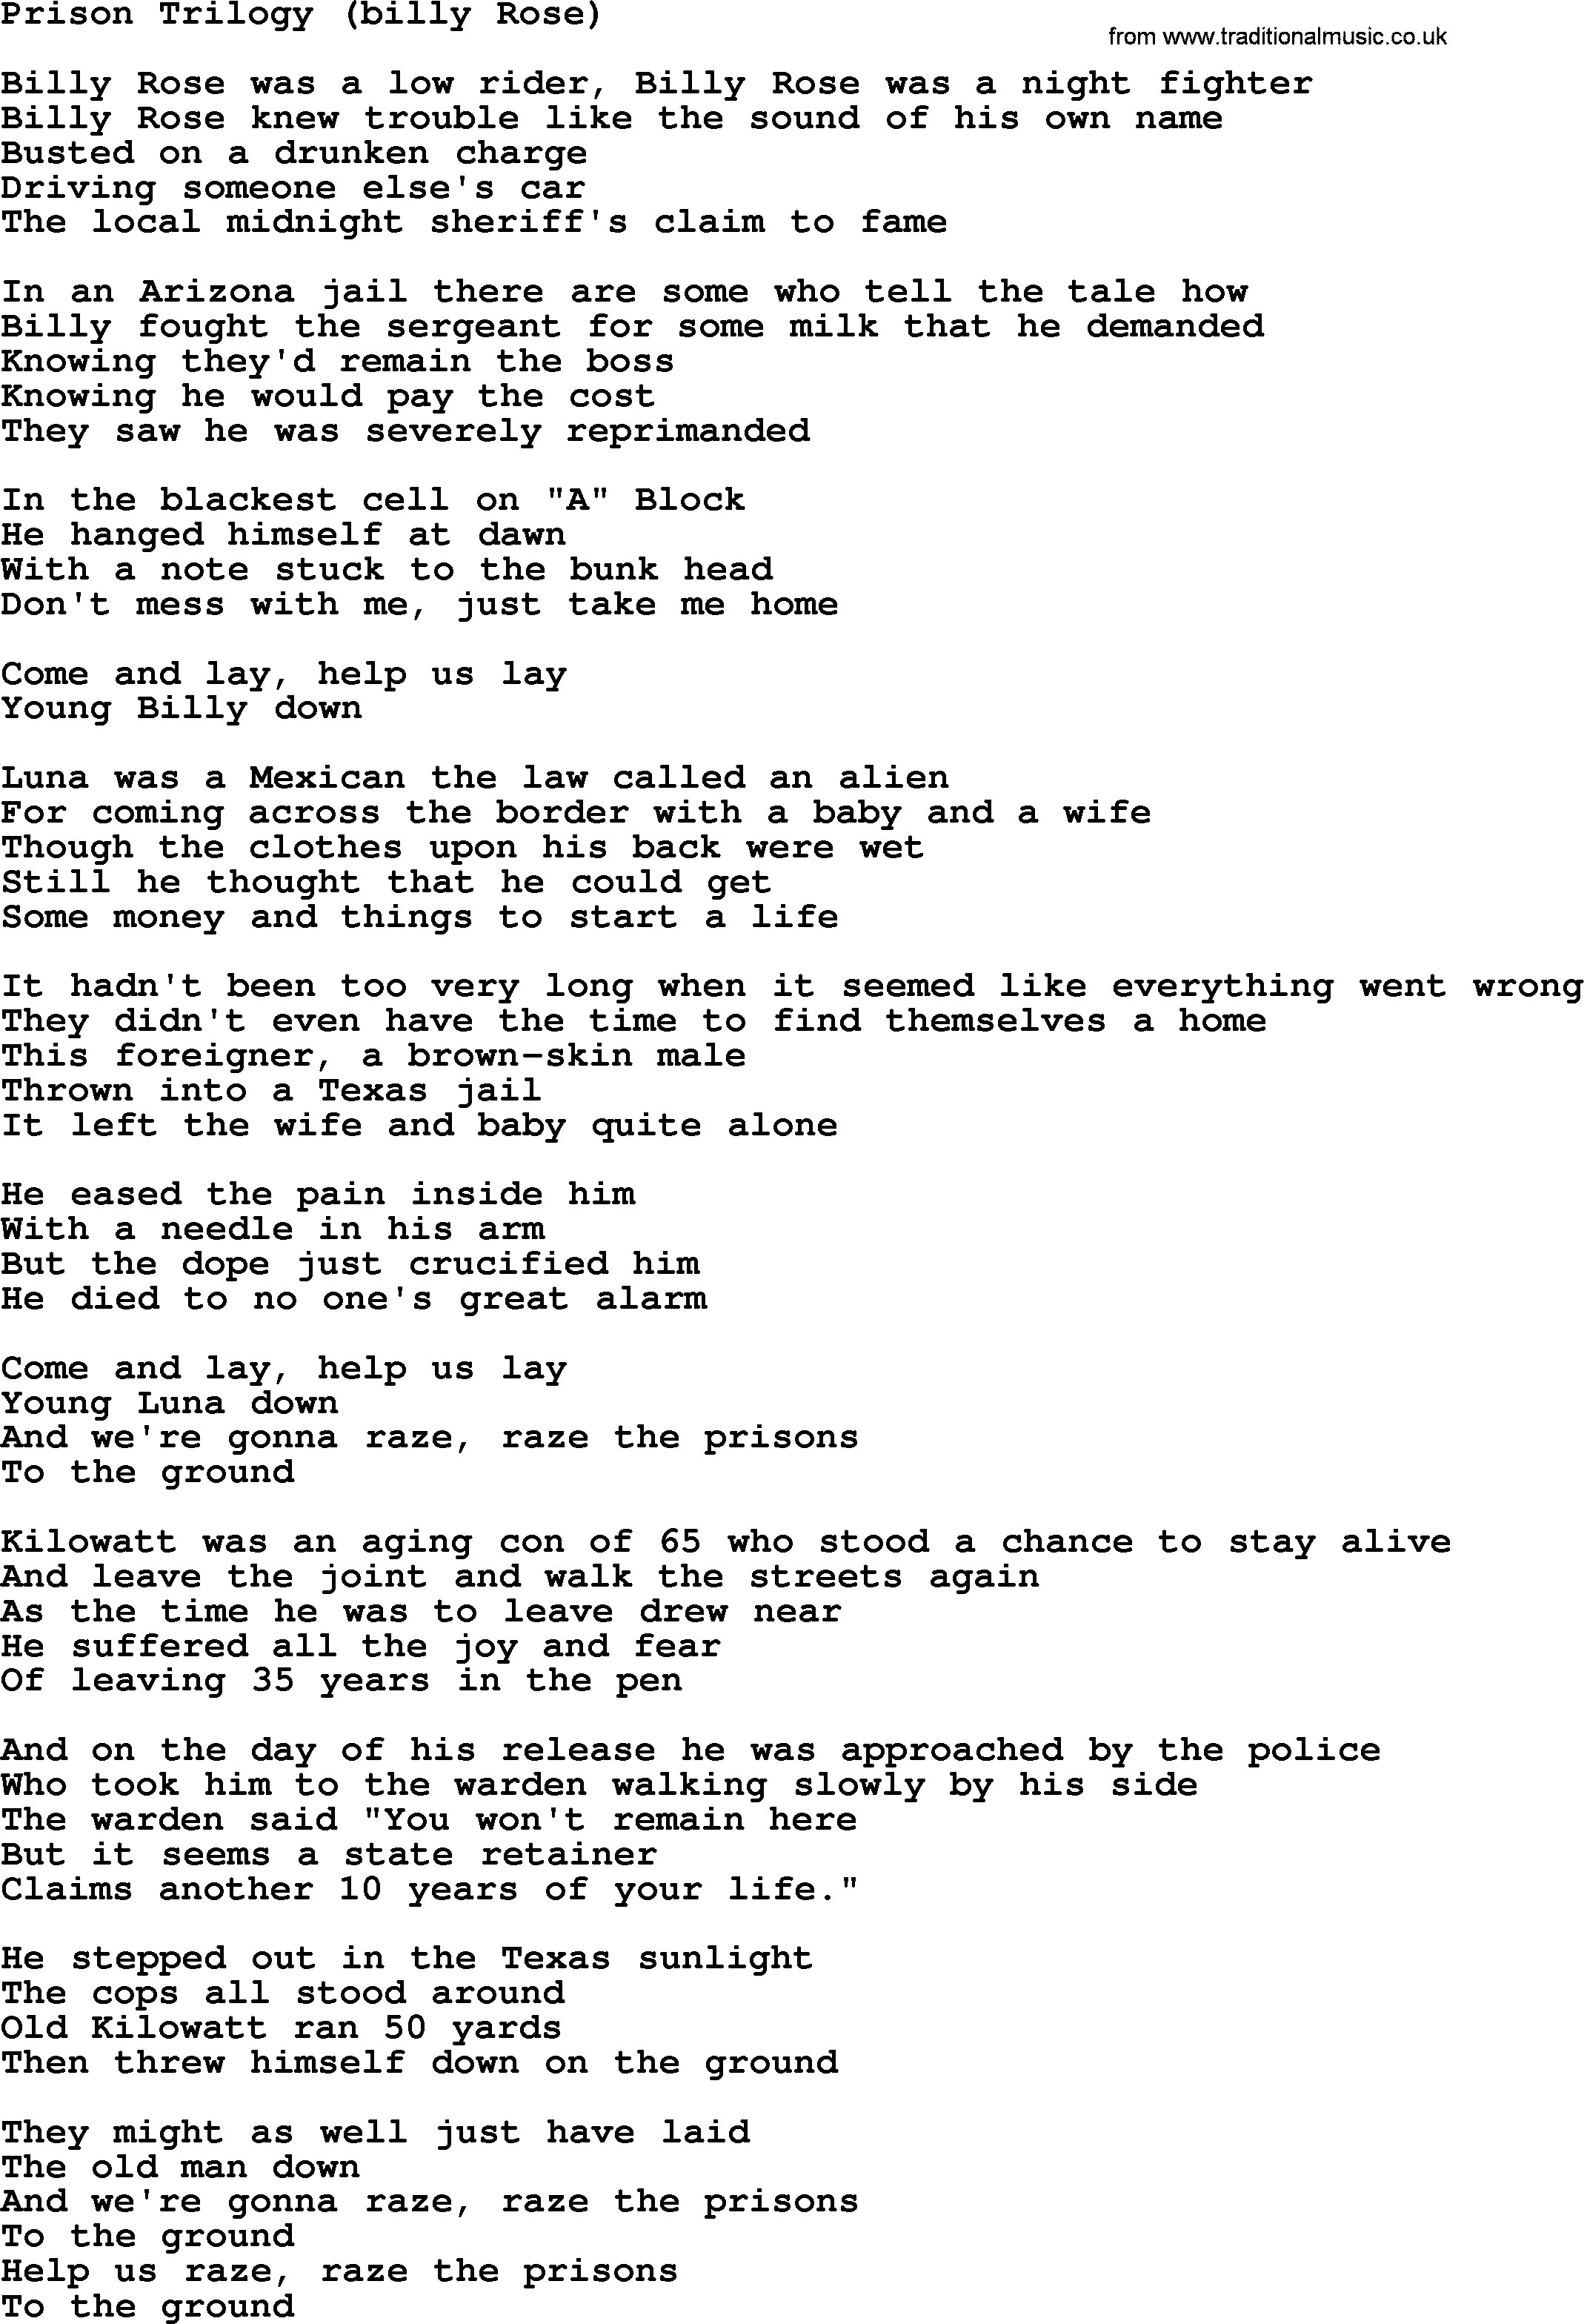 Joan Baez song Prison Trilogy(Billy Rose), lyrics